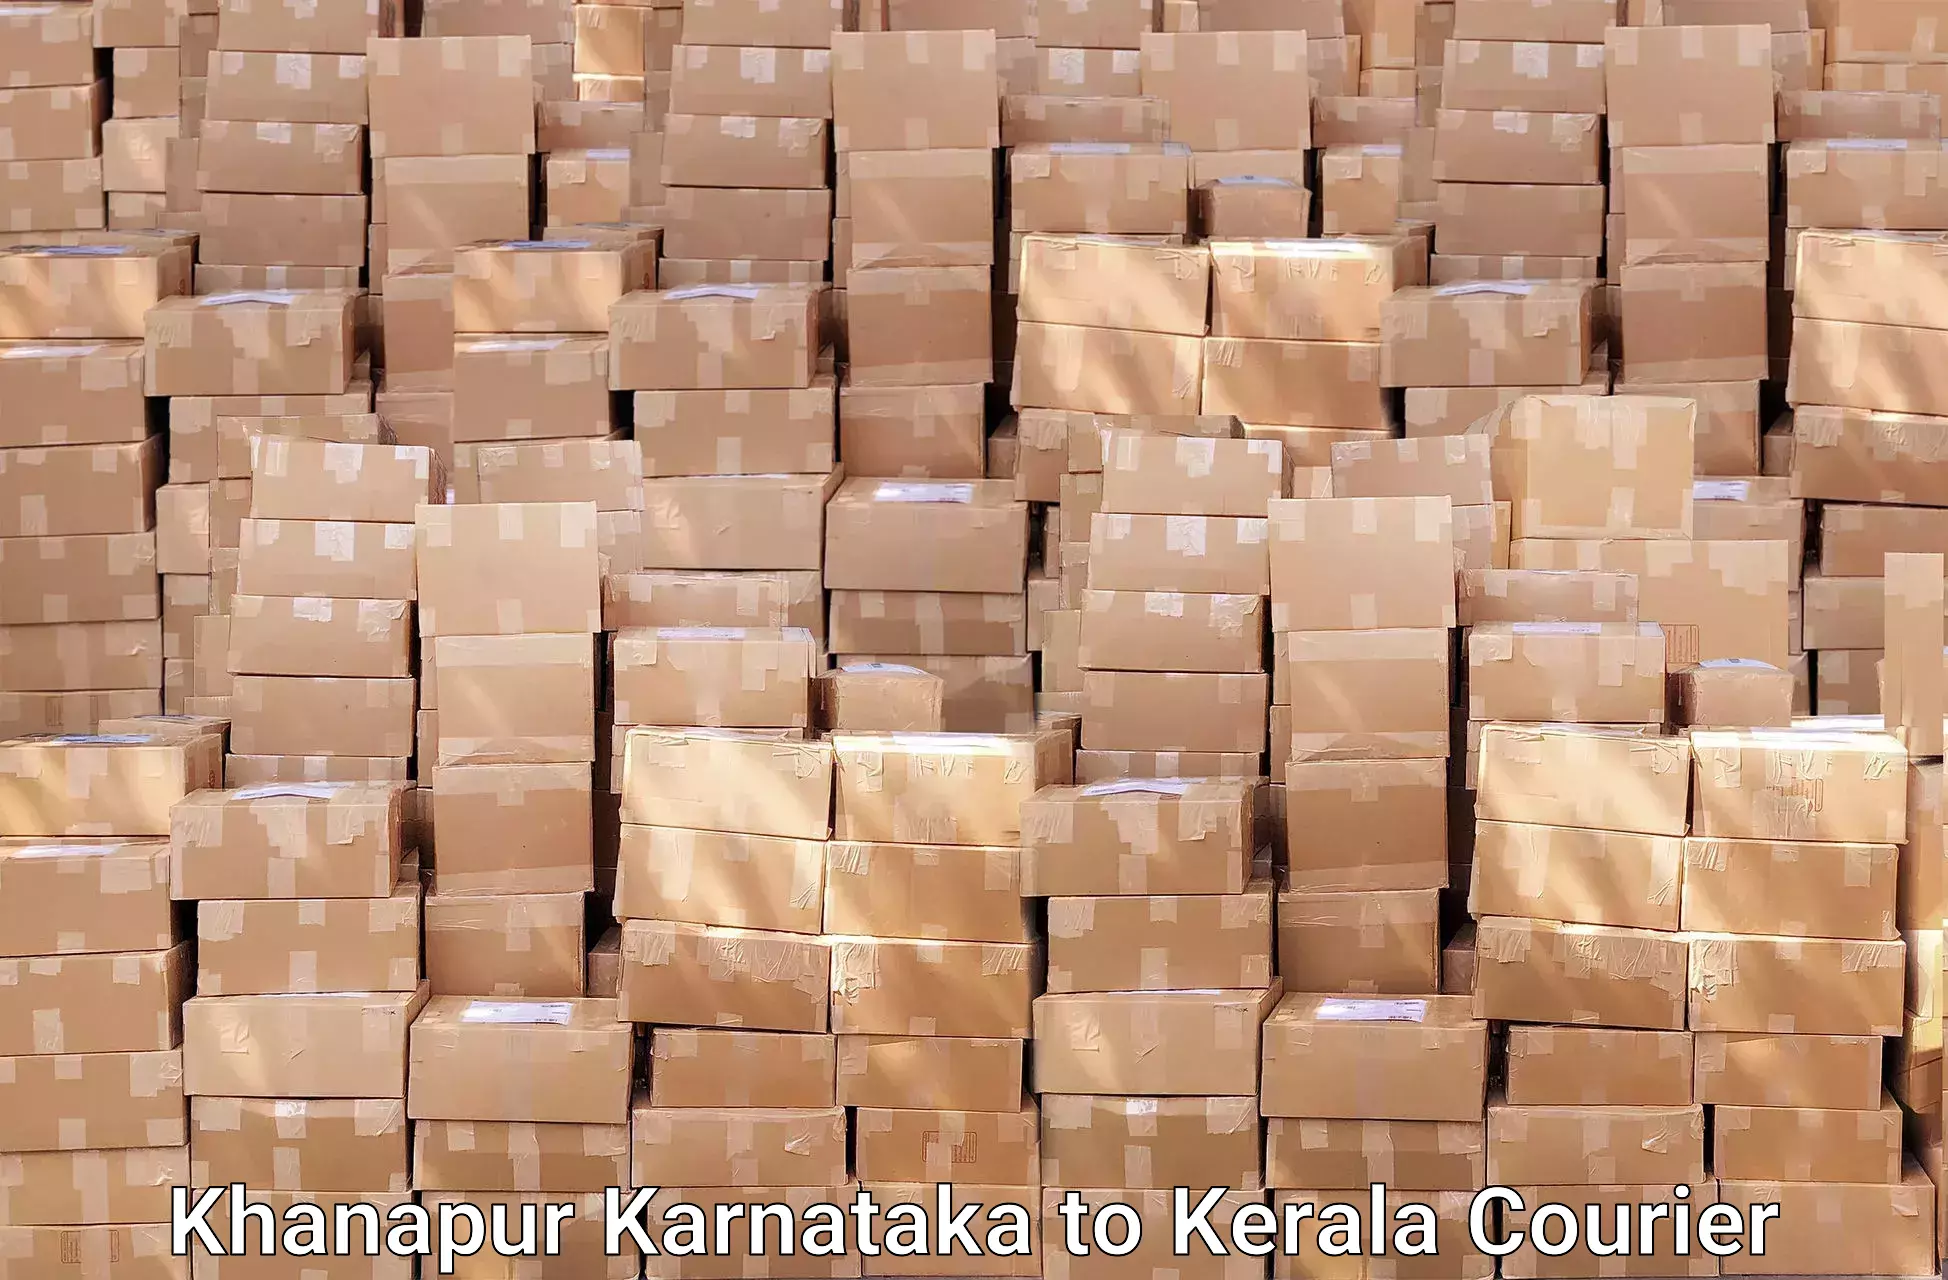 Professional moving assistance Khanapur Karnataka to Nileshwar